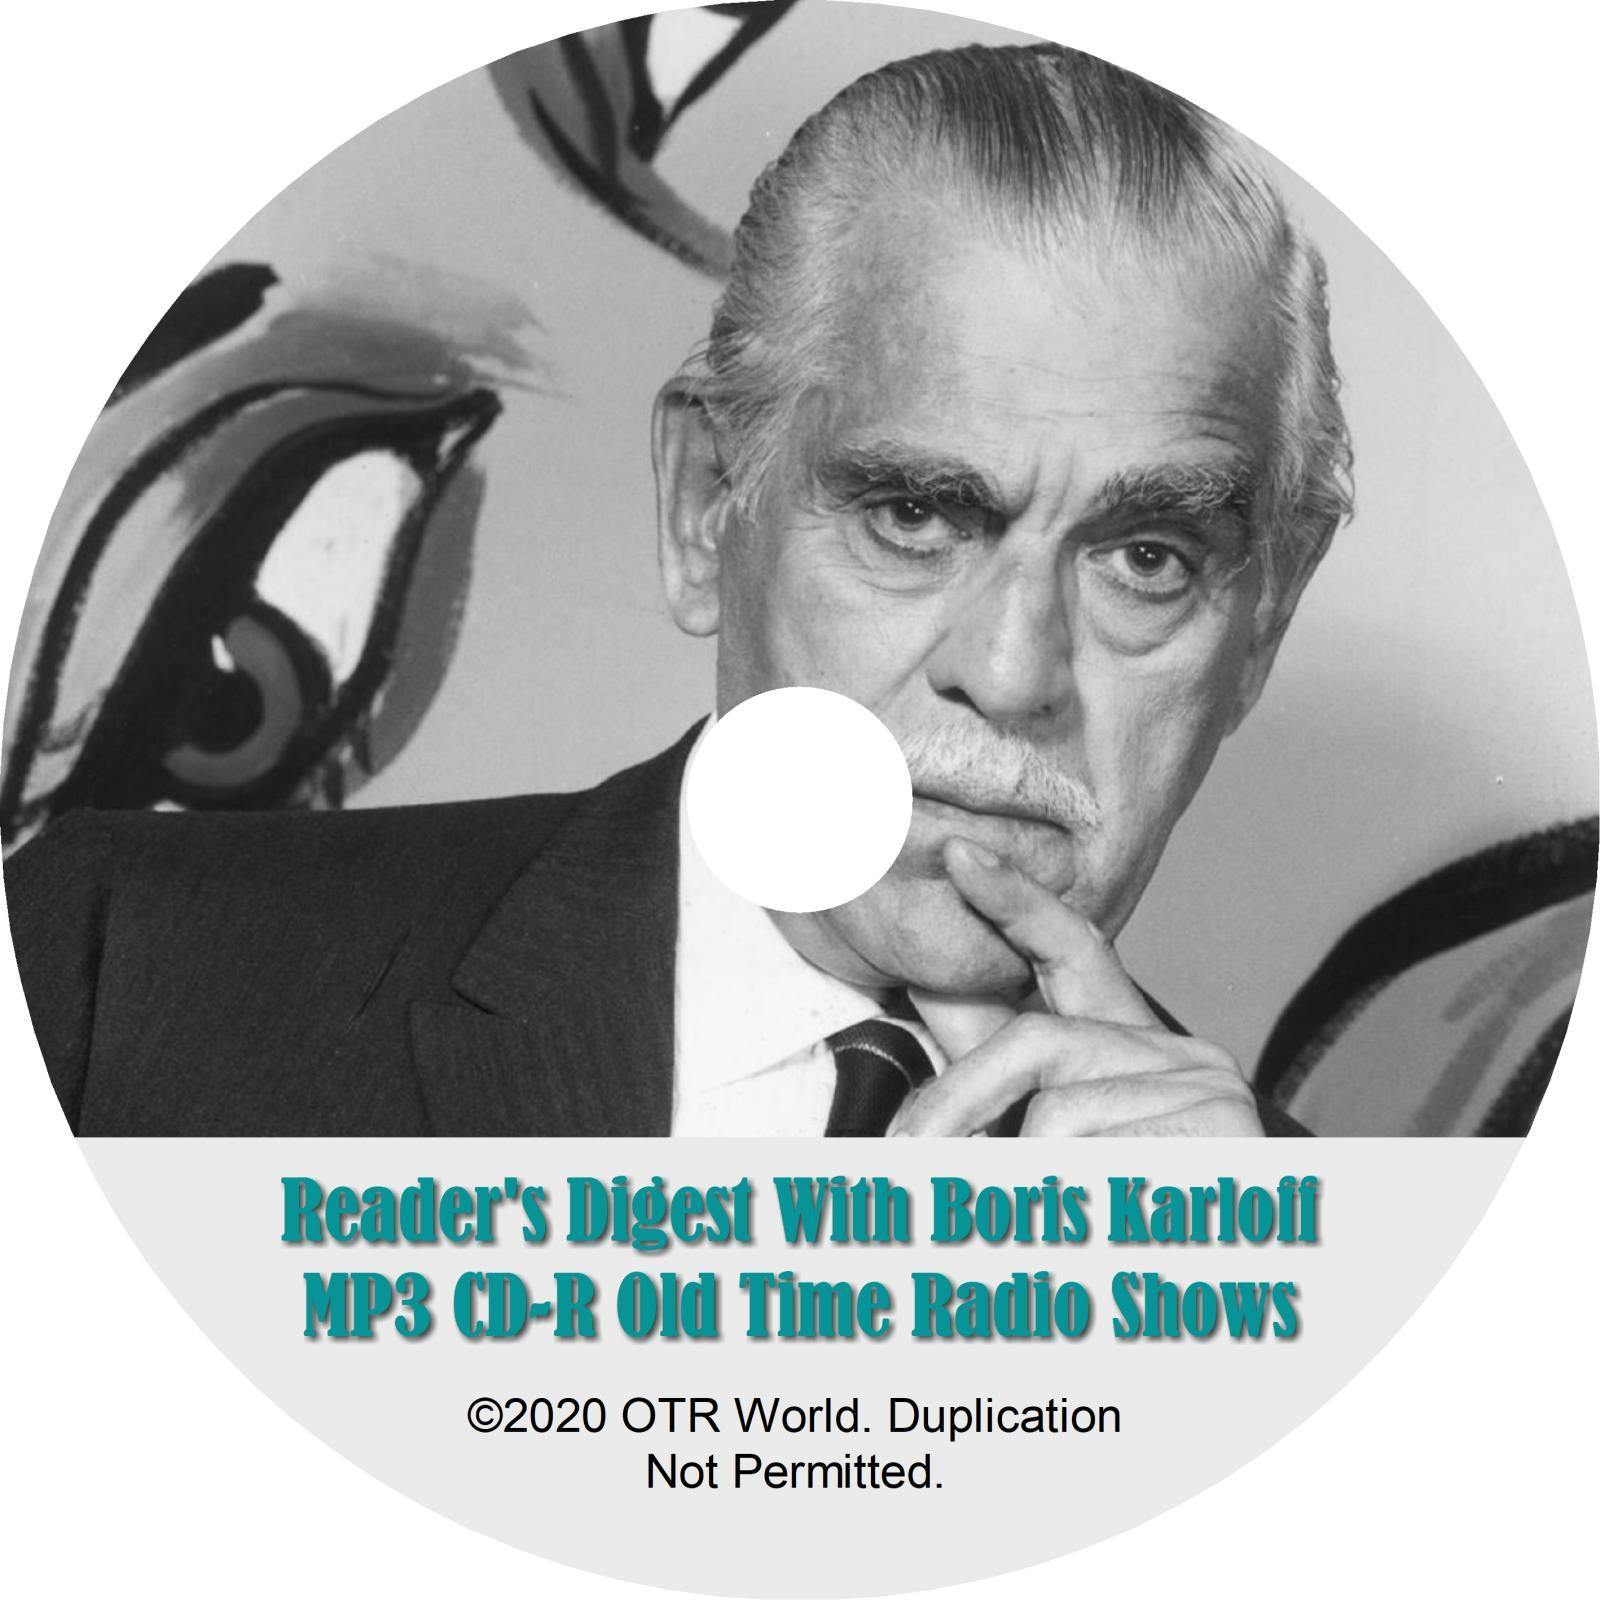 Reader's Digest With Boris Karloff OTR Old Time Radio Shows MP3 CD-R 5 Episodes - OTR World